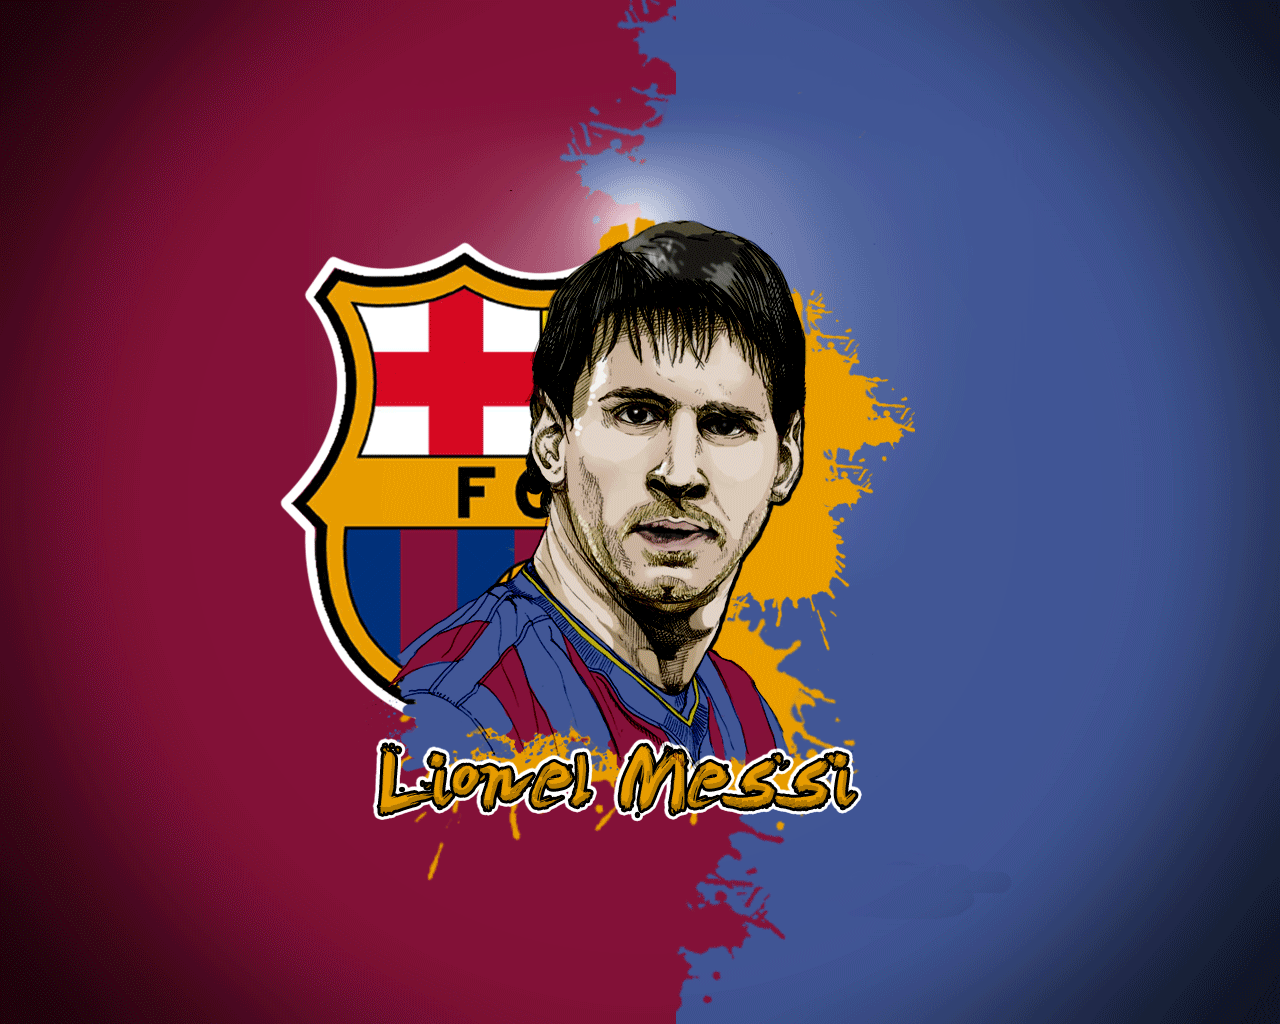 Messi Wallpaper Animated. Lionel messi wallpaper, Lionel messi